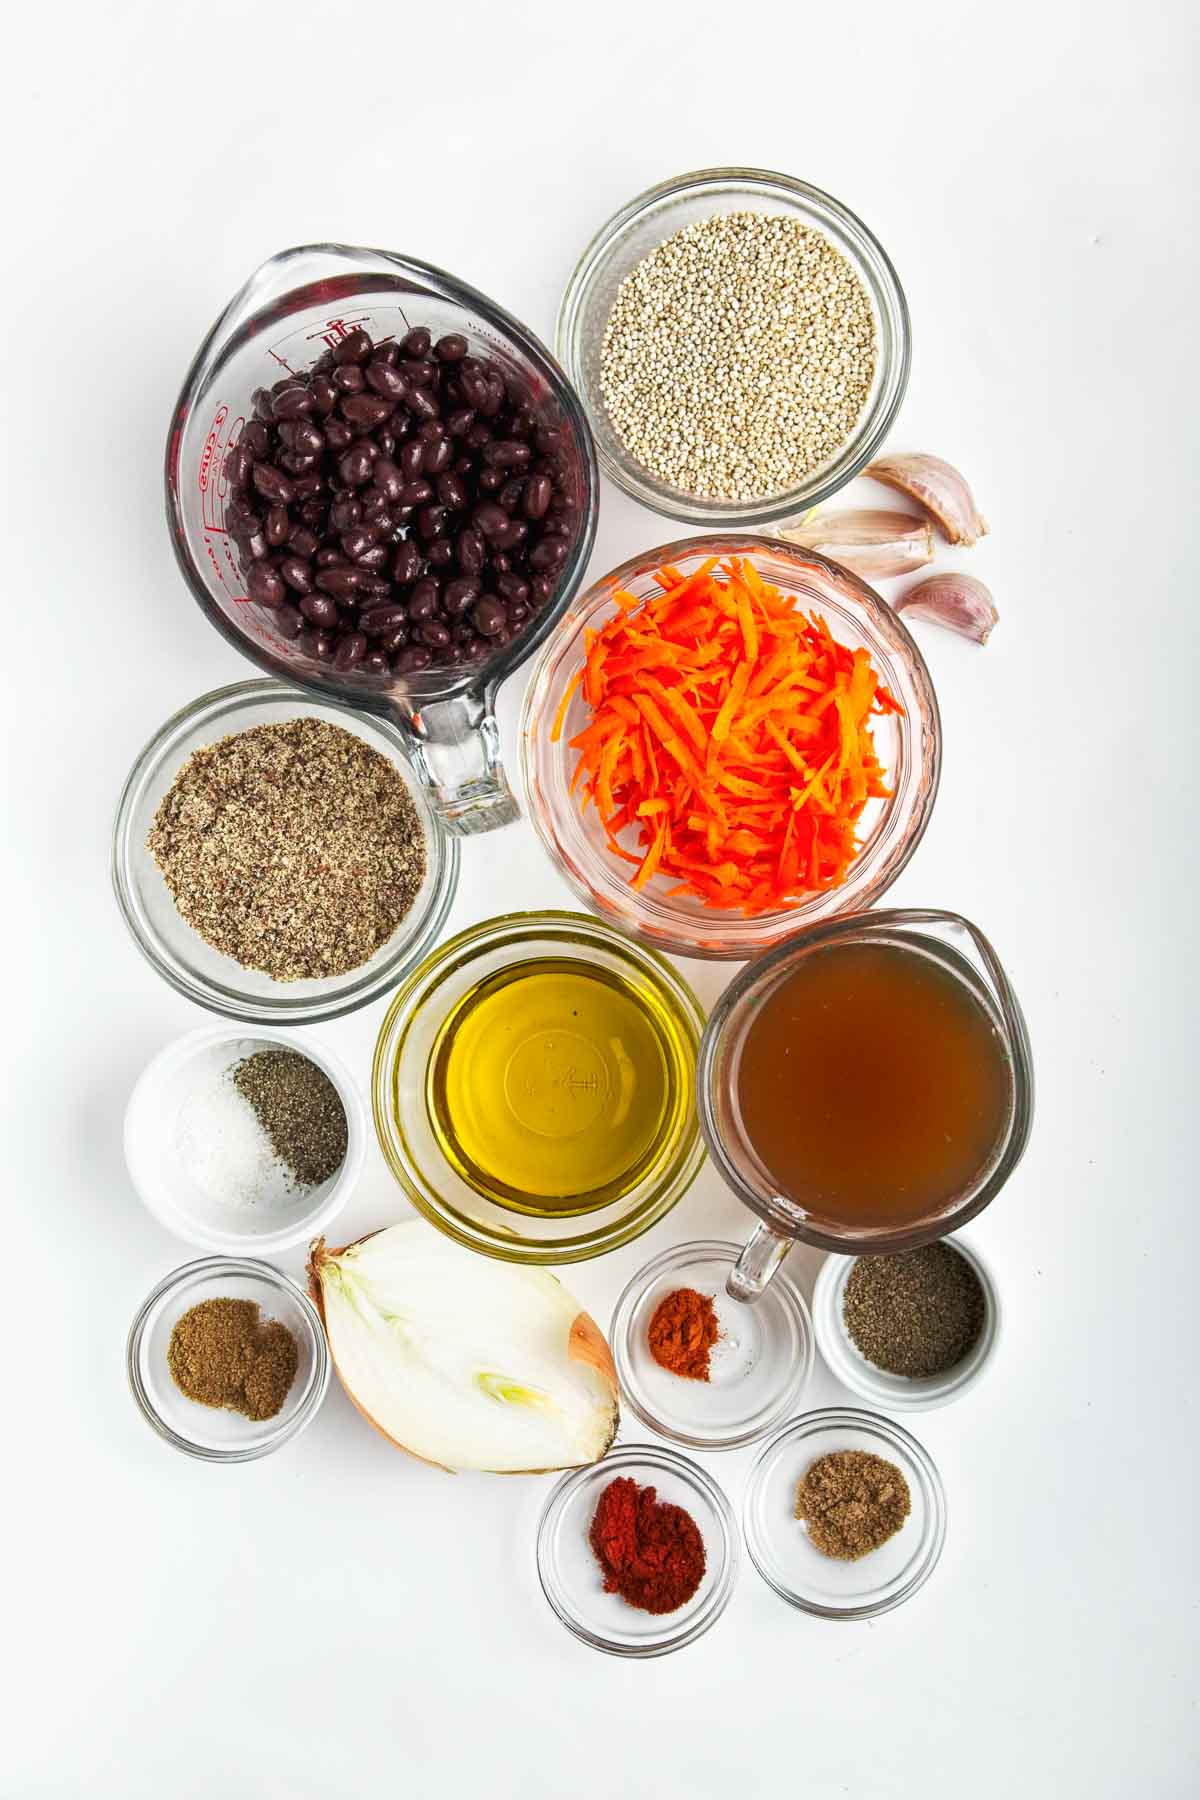 Ingredients to make quinoa black bean burgers